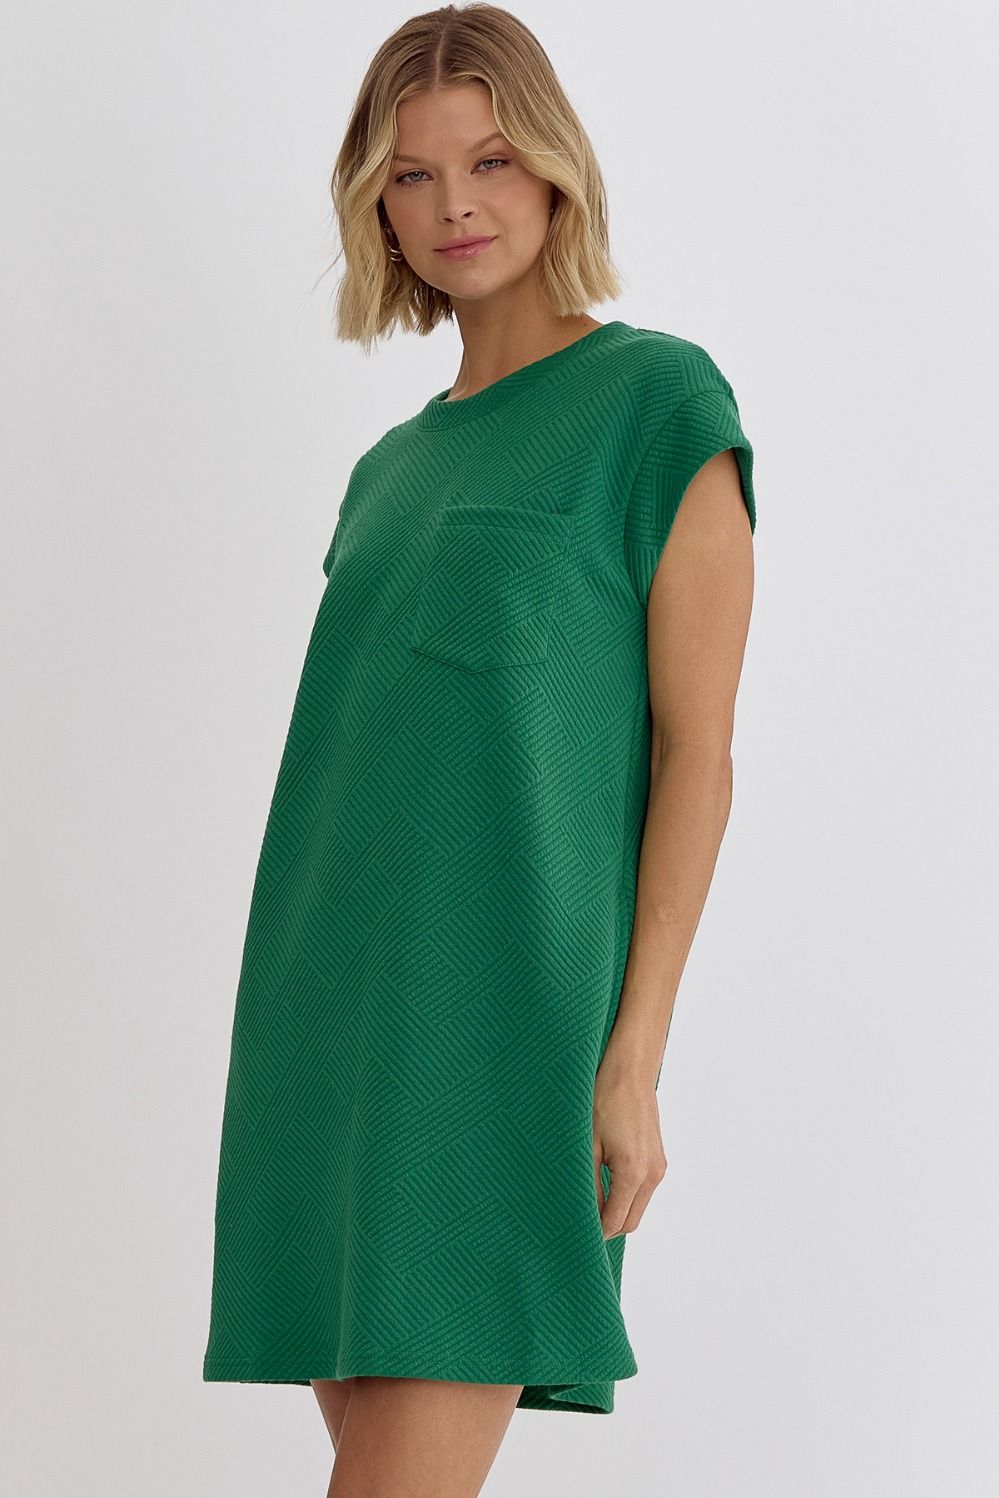 ENTRO INC Women's Dresses GREEN / S Textured Round Neck Sleeveless Mini Dress || David's Clothing D22390